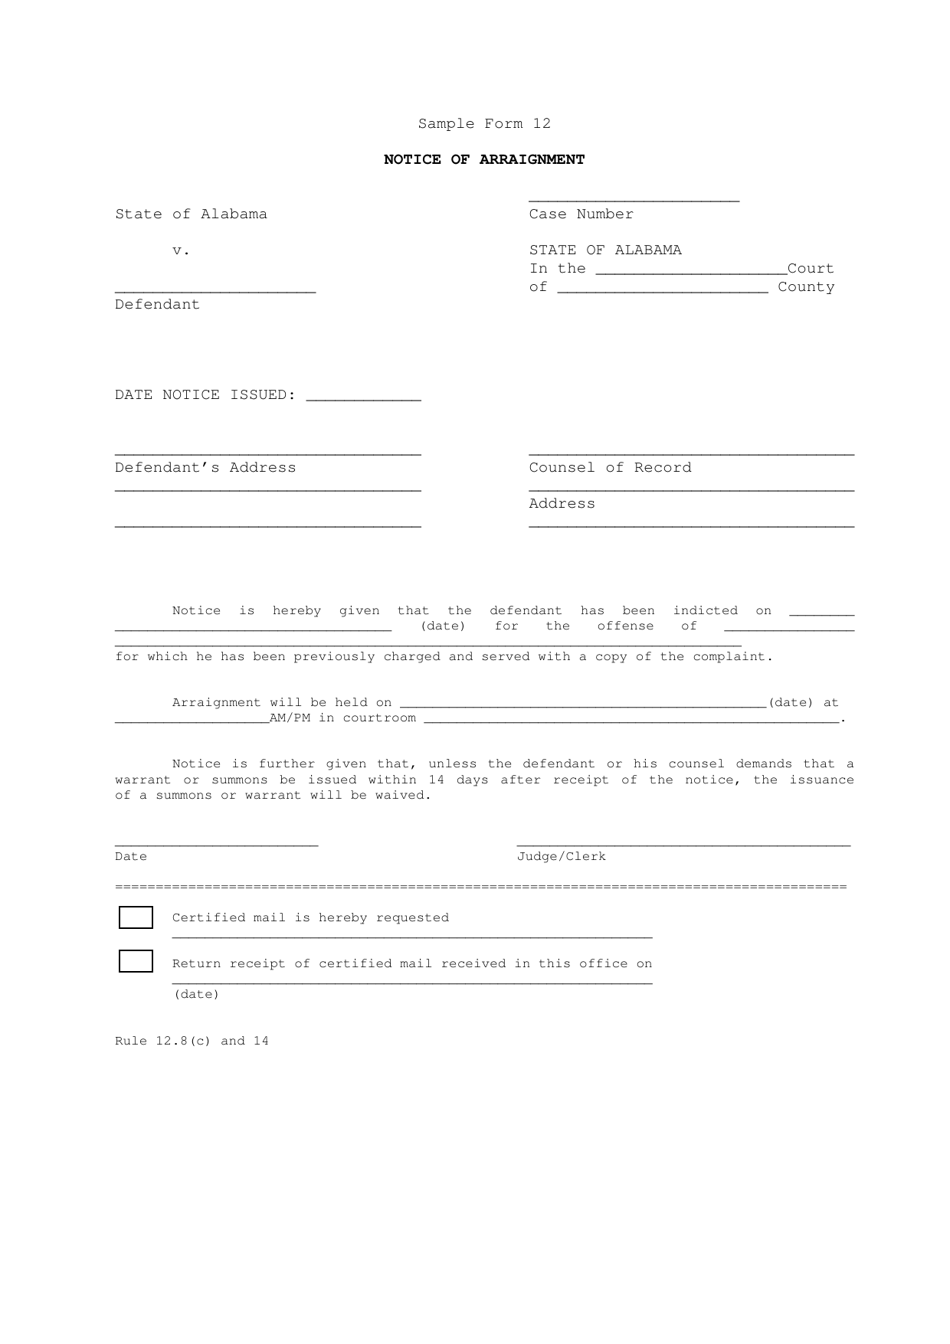 Sample Form 12 Notice of Arraignment - Alabama, Page 1